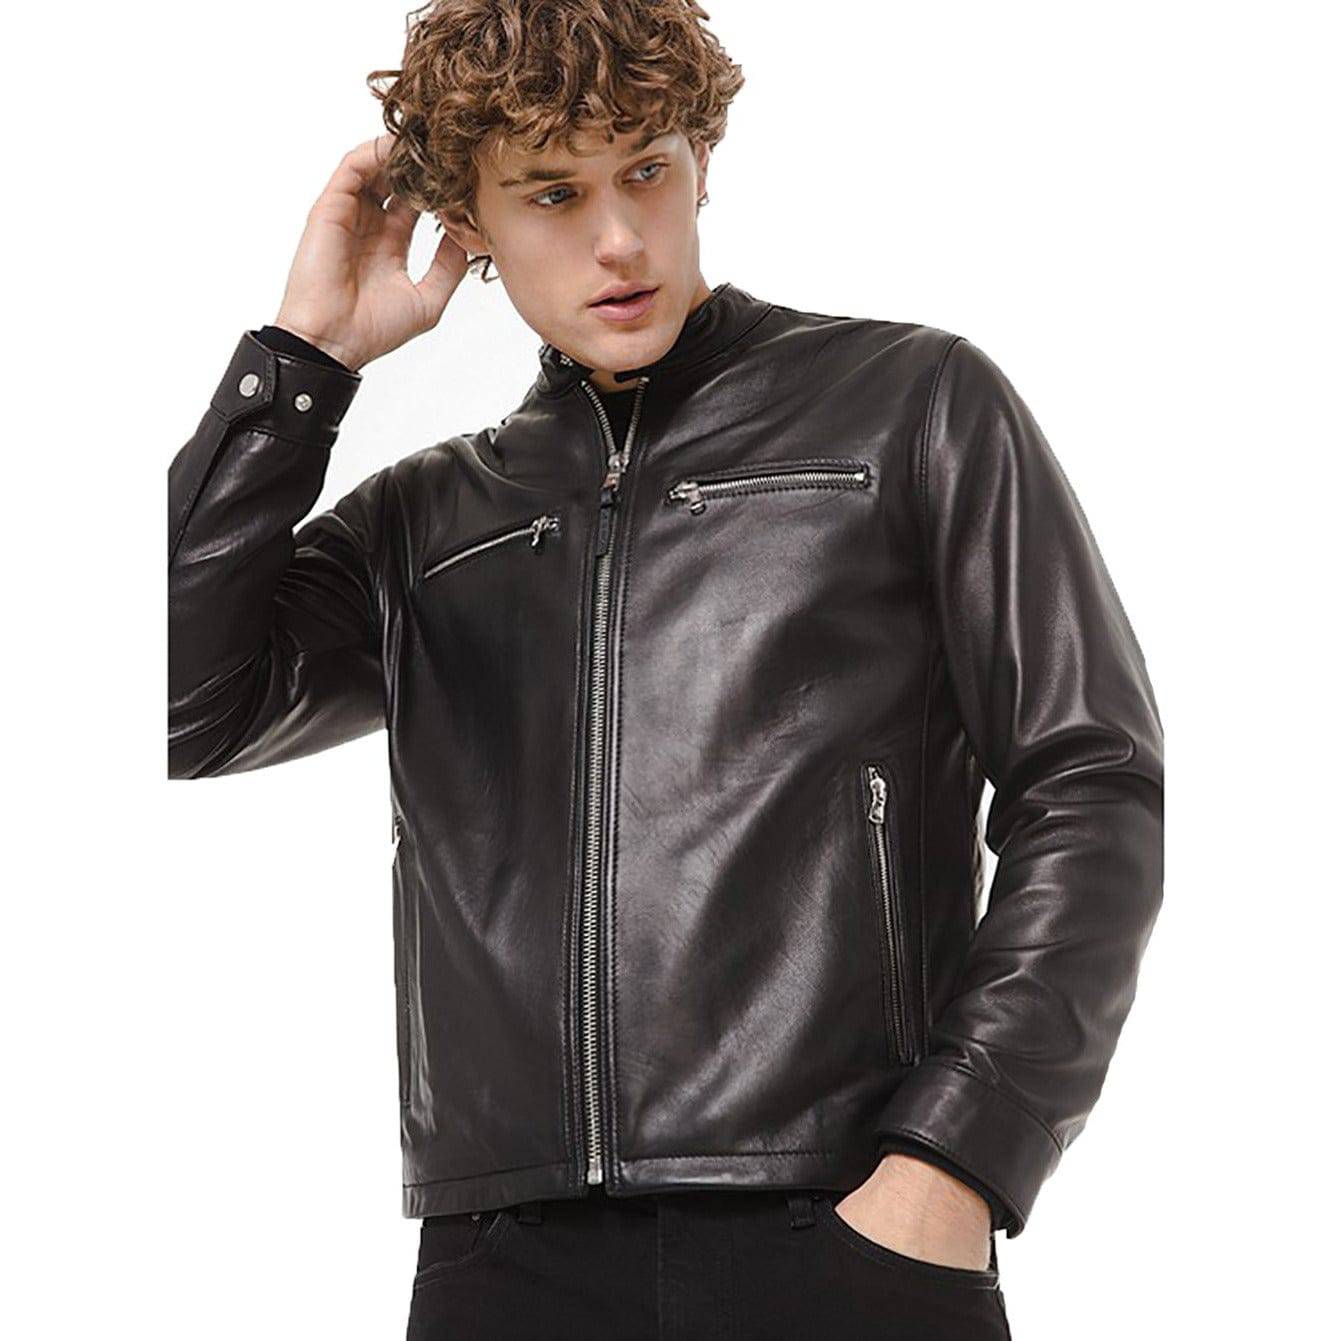 Michael Kors Mens's Moto Leather Jacket - Zooloo Leather